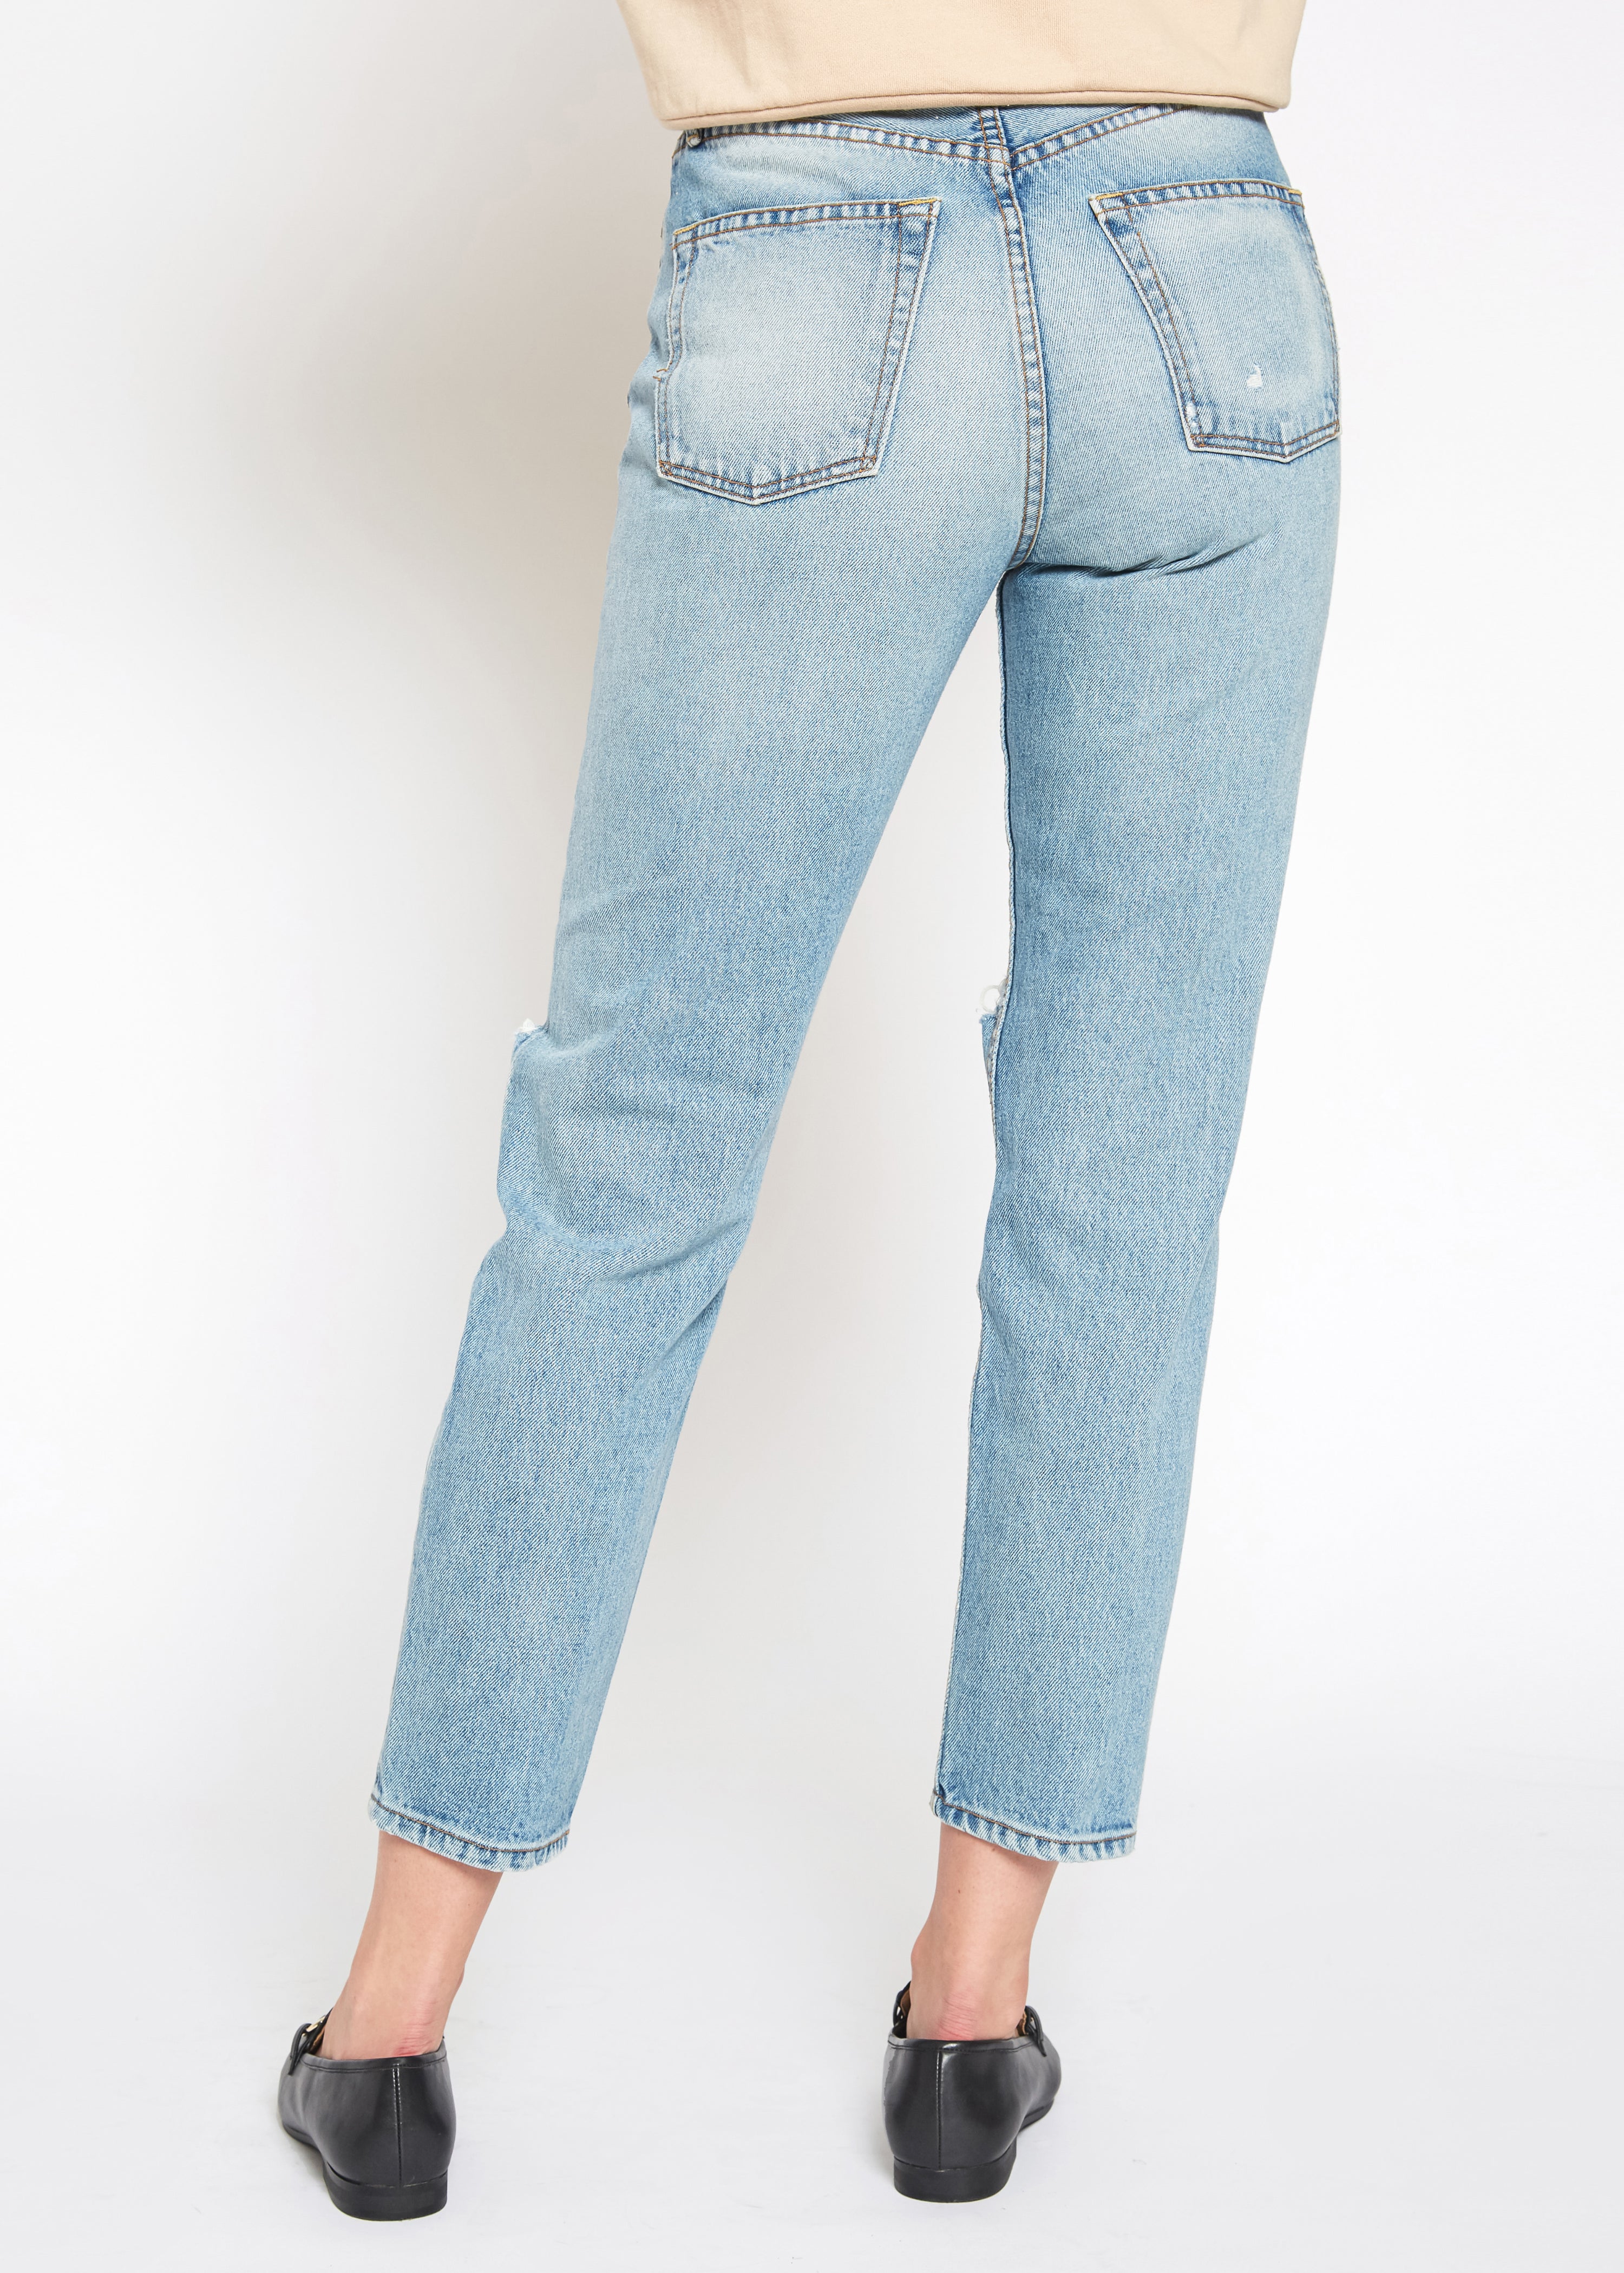 Susie Classic Fit Jeans In Phoenix - Noend Denim